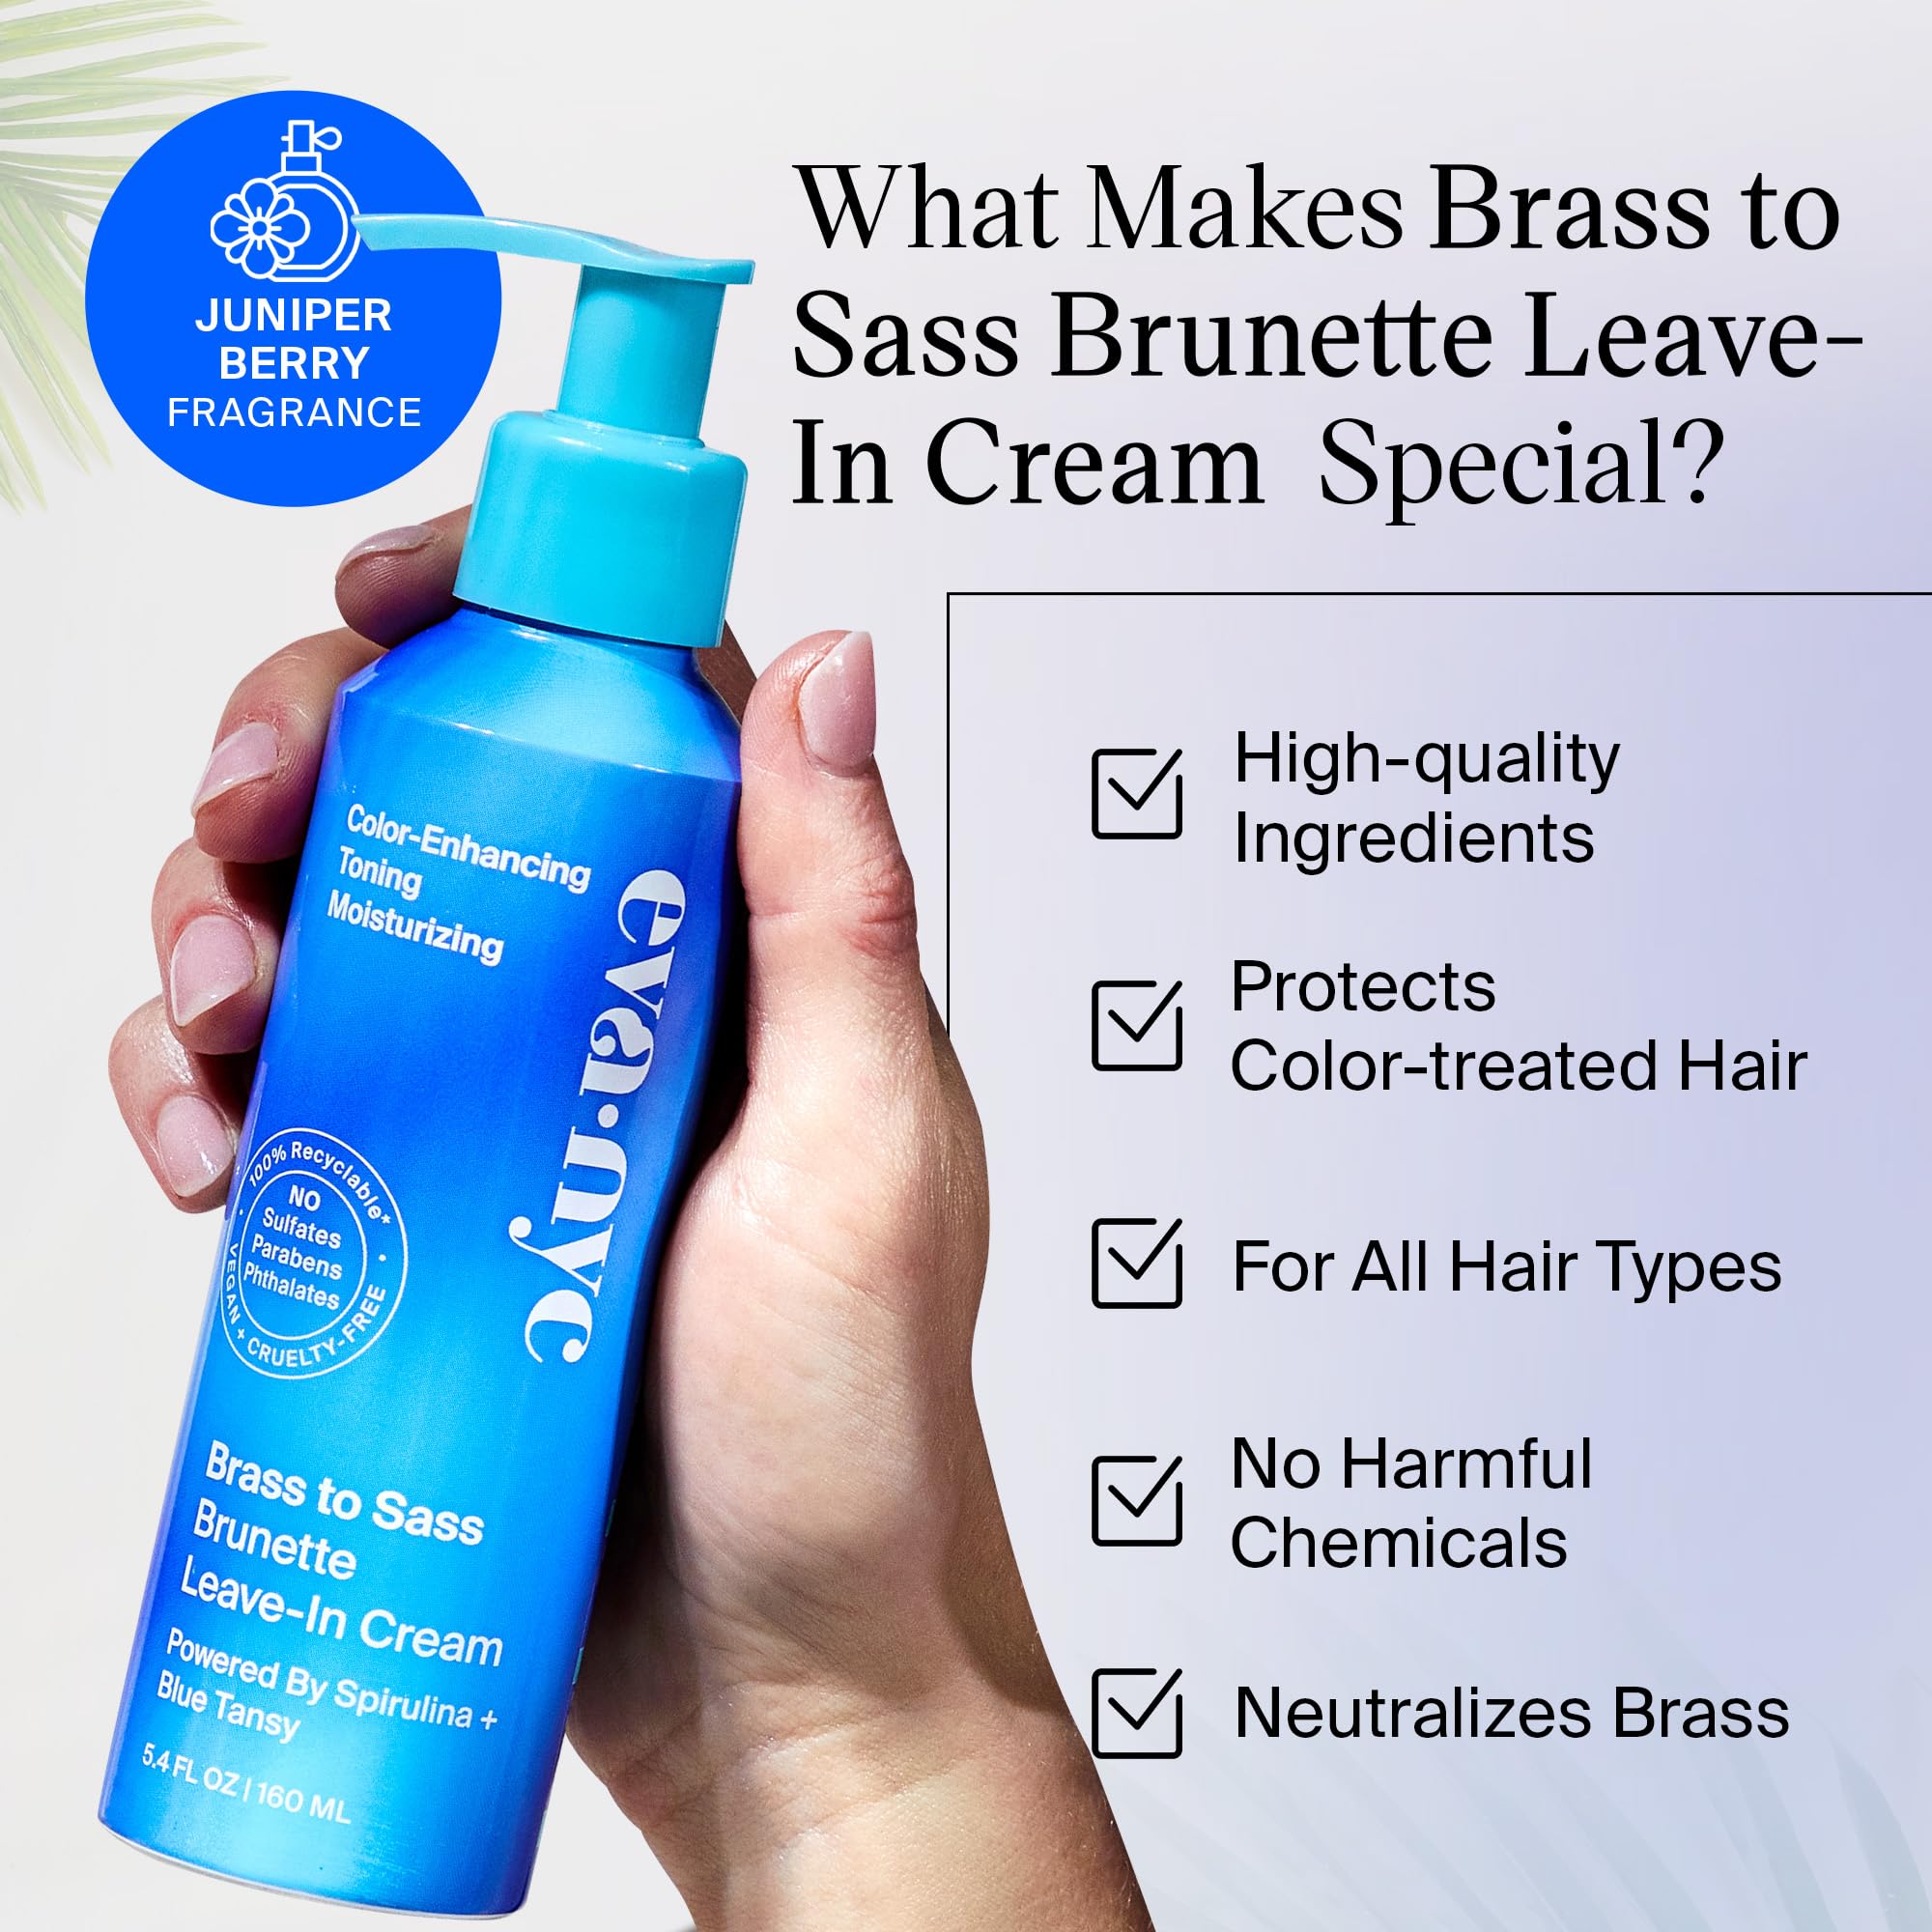 Eva NYC Brass to Sass Brunette Leave-In Cream, 5.4 fl oz